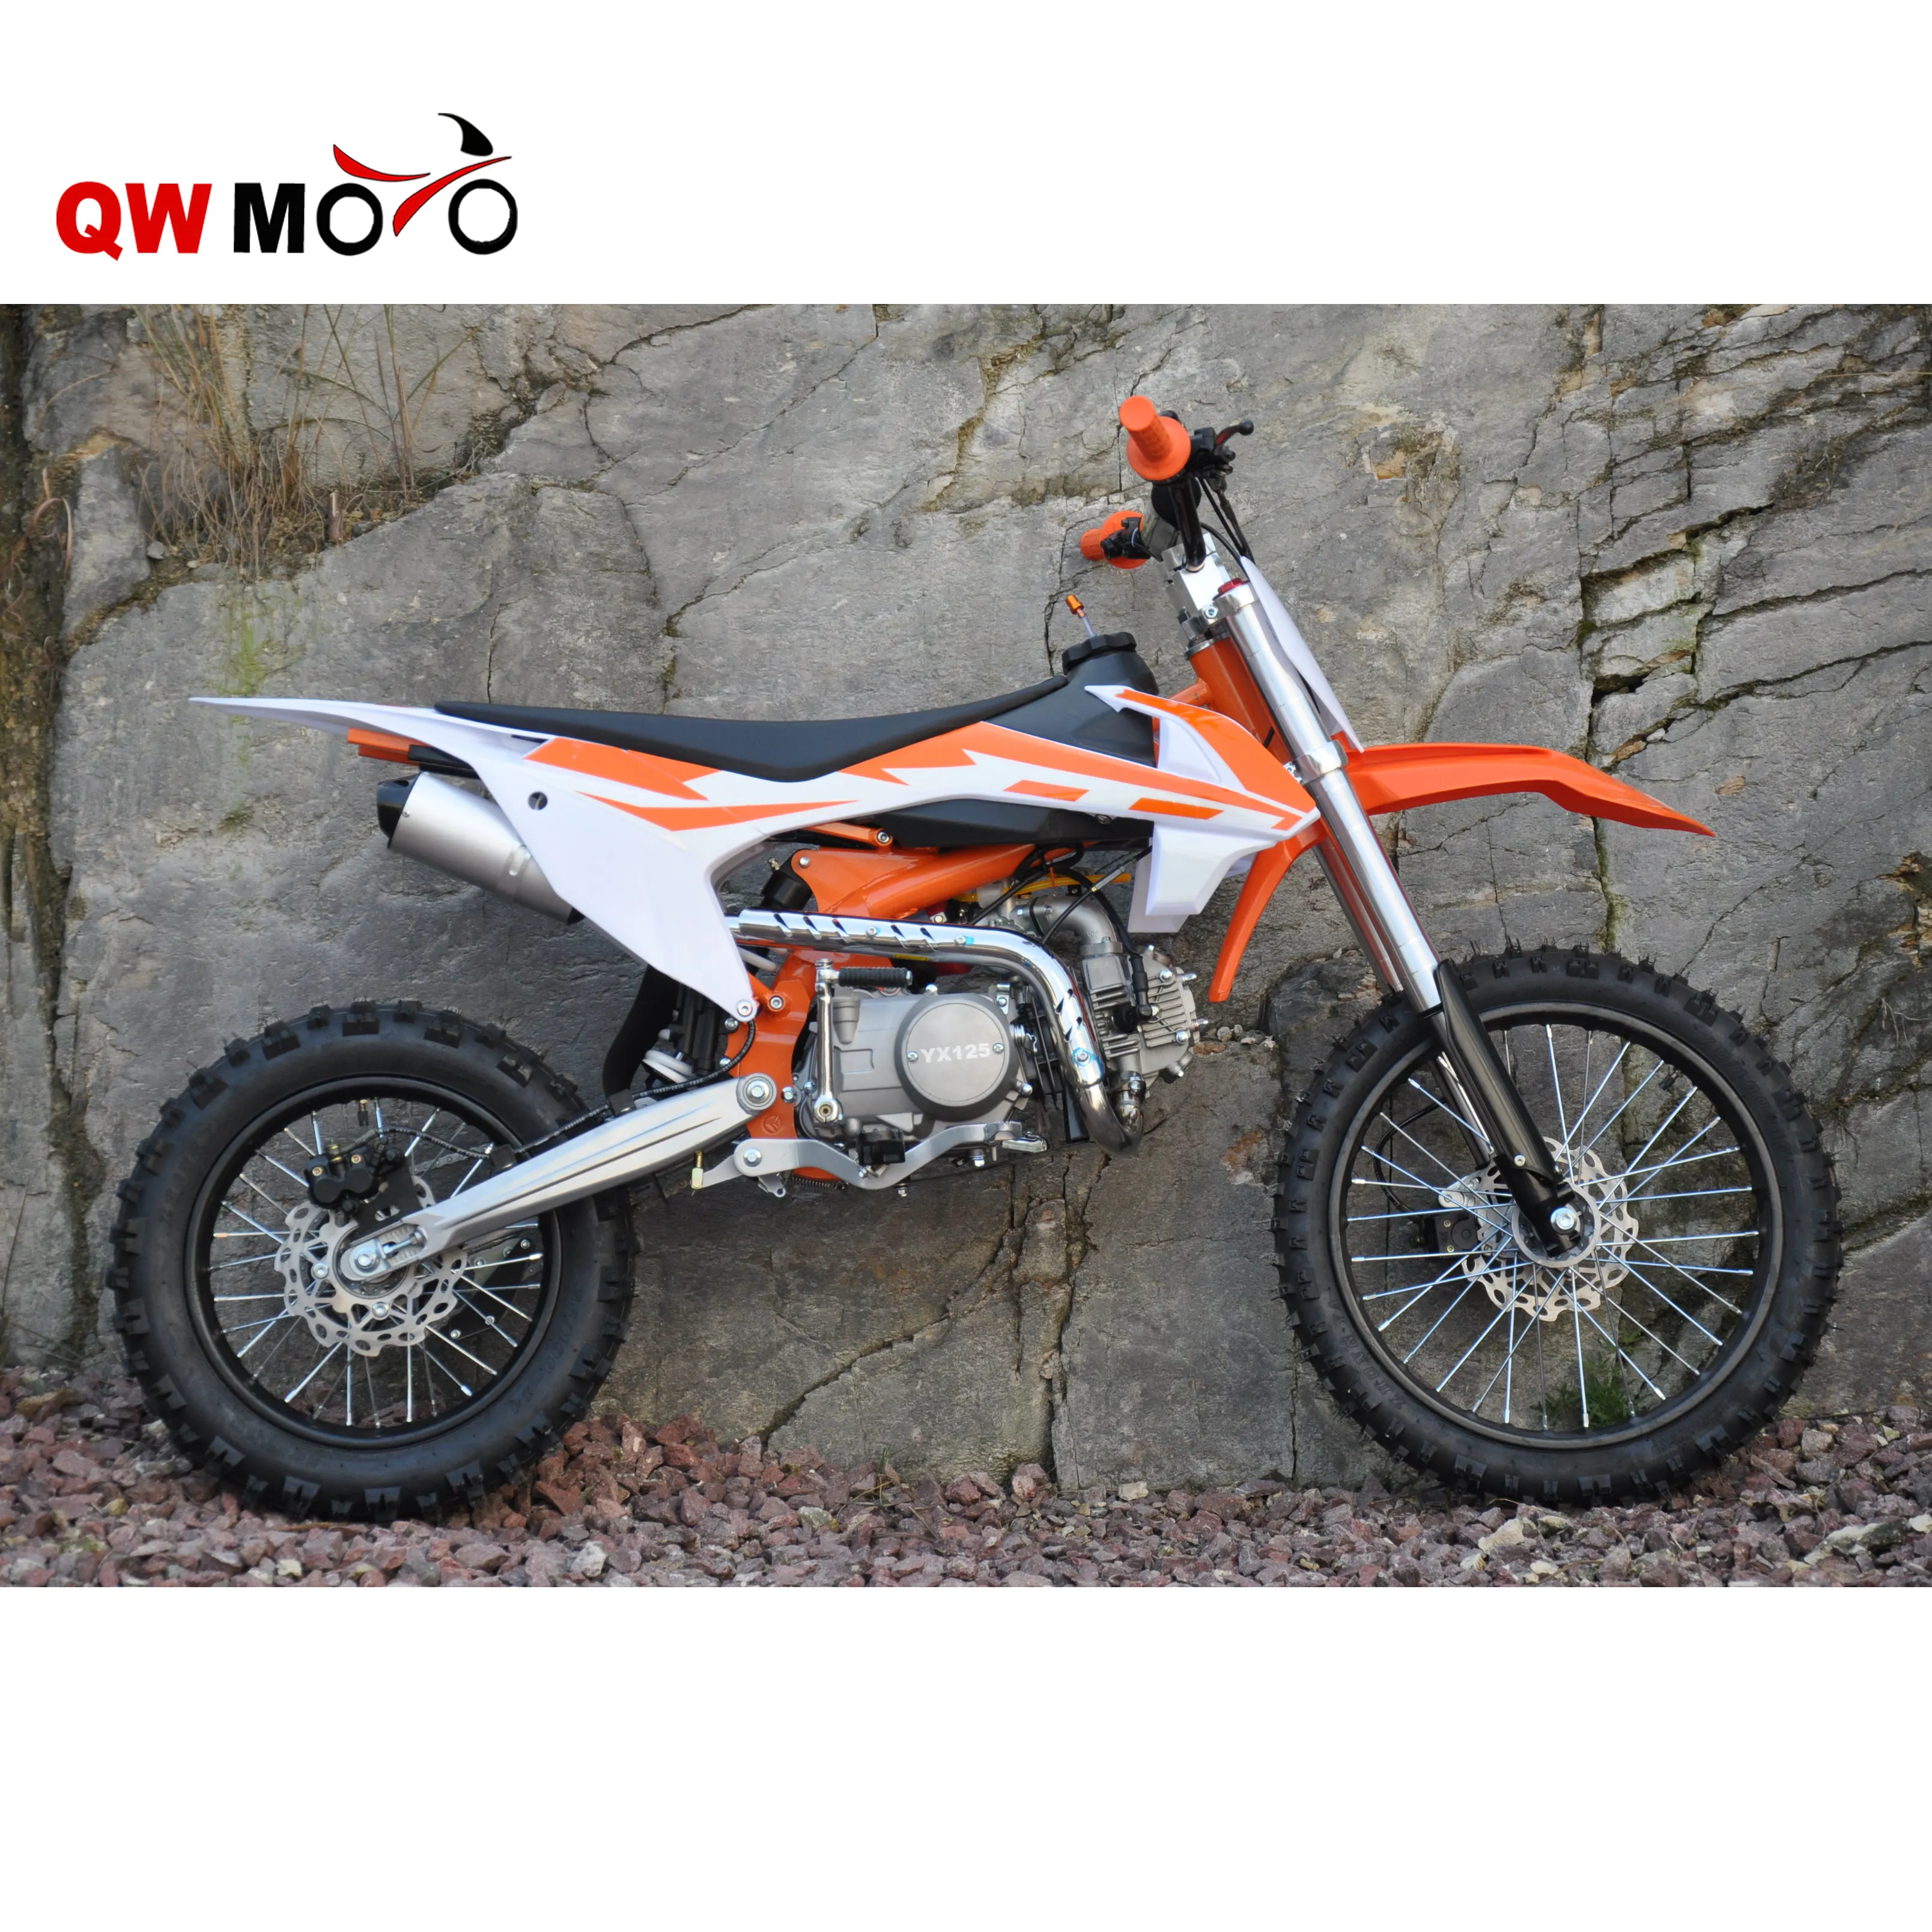 QWMOTO CE125cc cheap dirtbike cross pit bike for sale